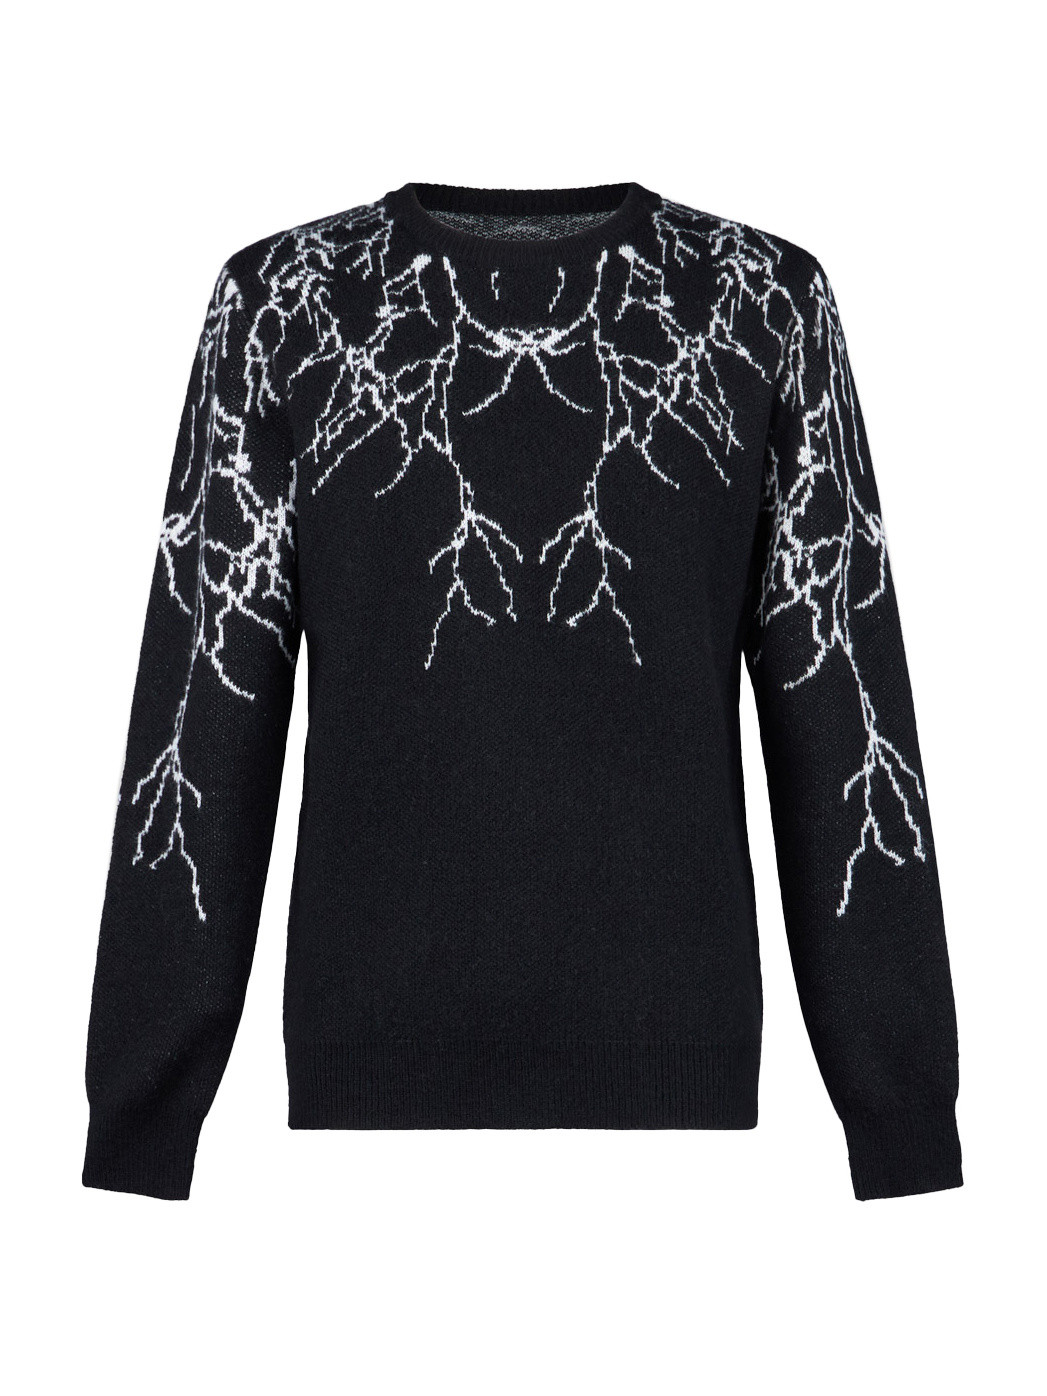 Phobia - Lightning bolt sweater, Black, large image number 0